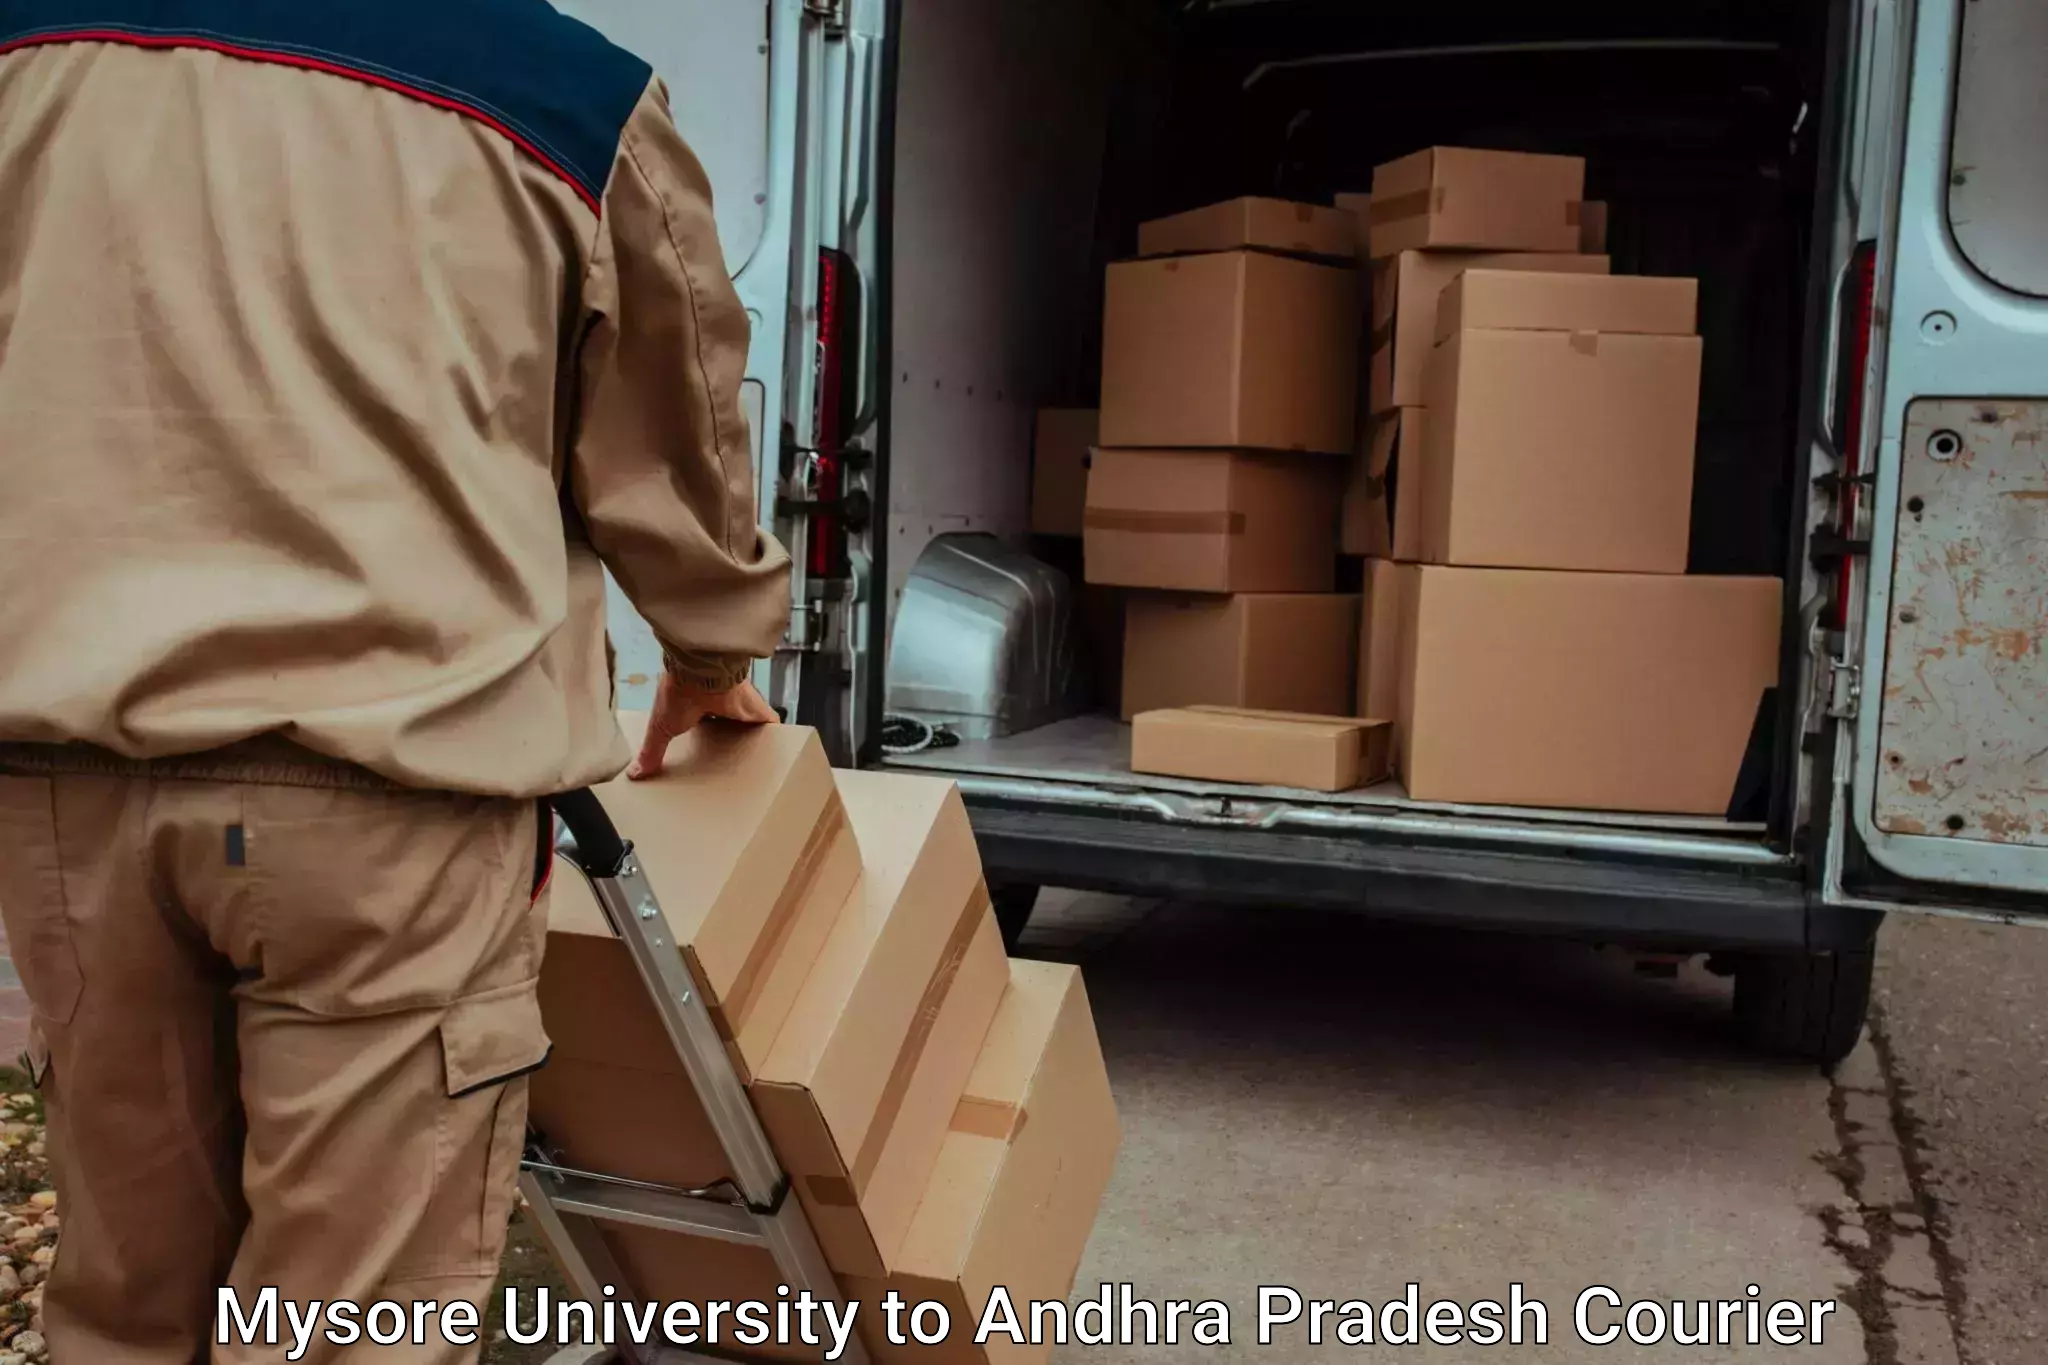 Luggage delivery providers Mysore University to Samarlakota